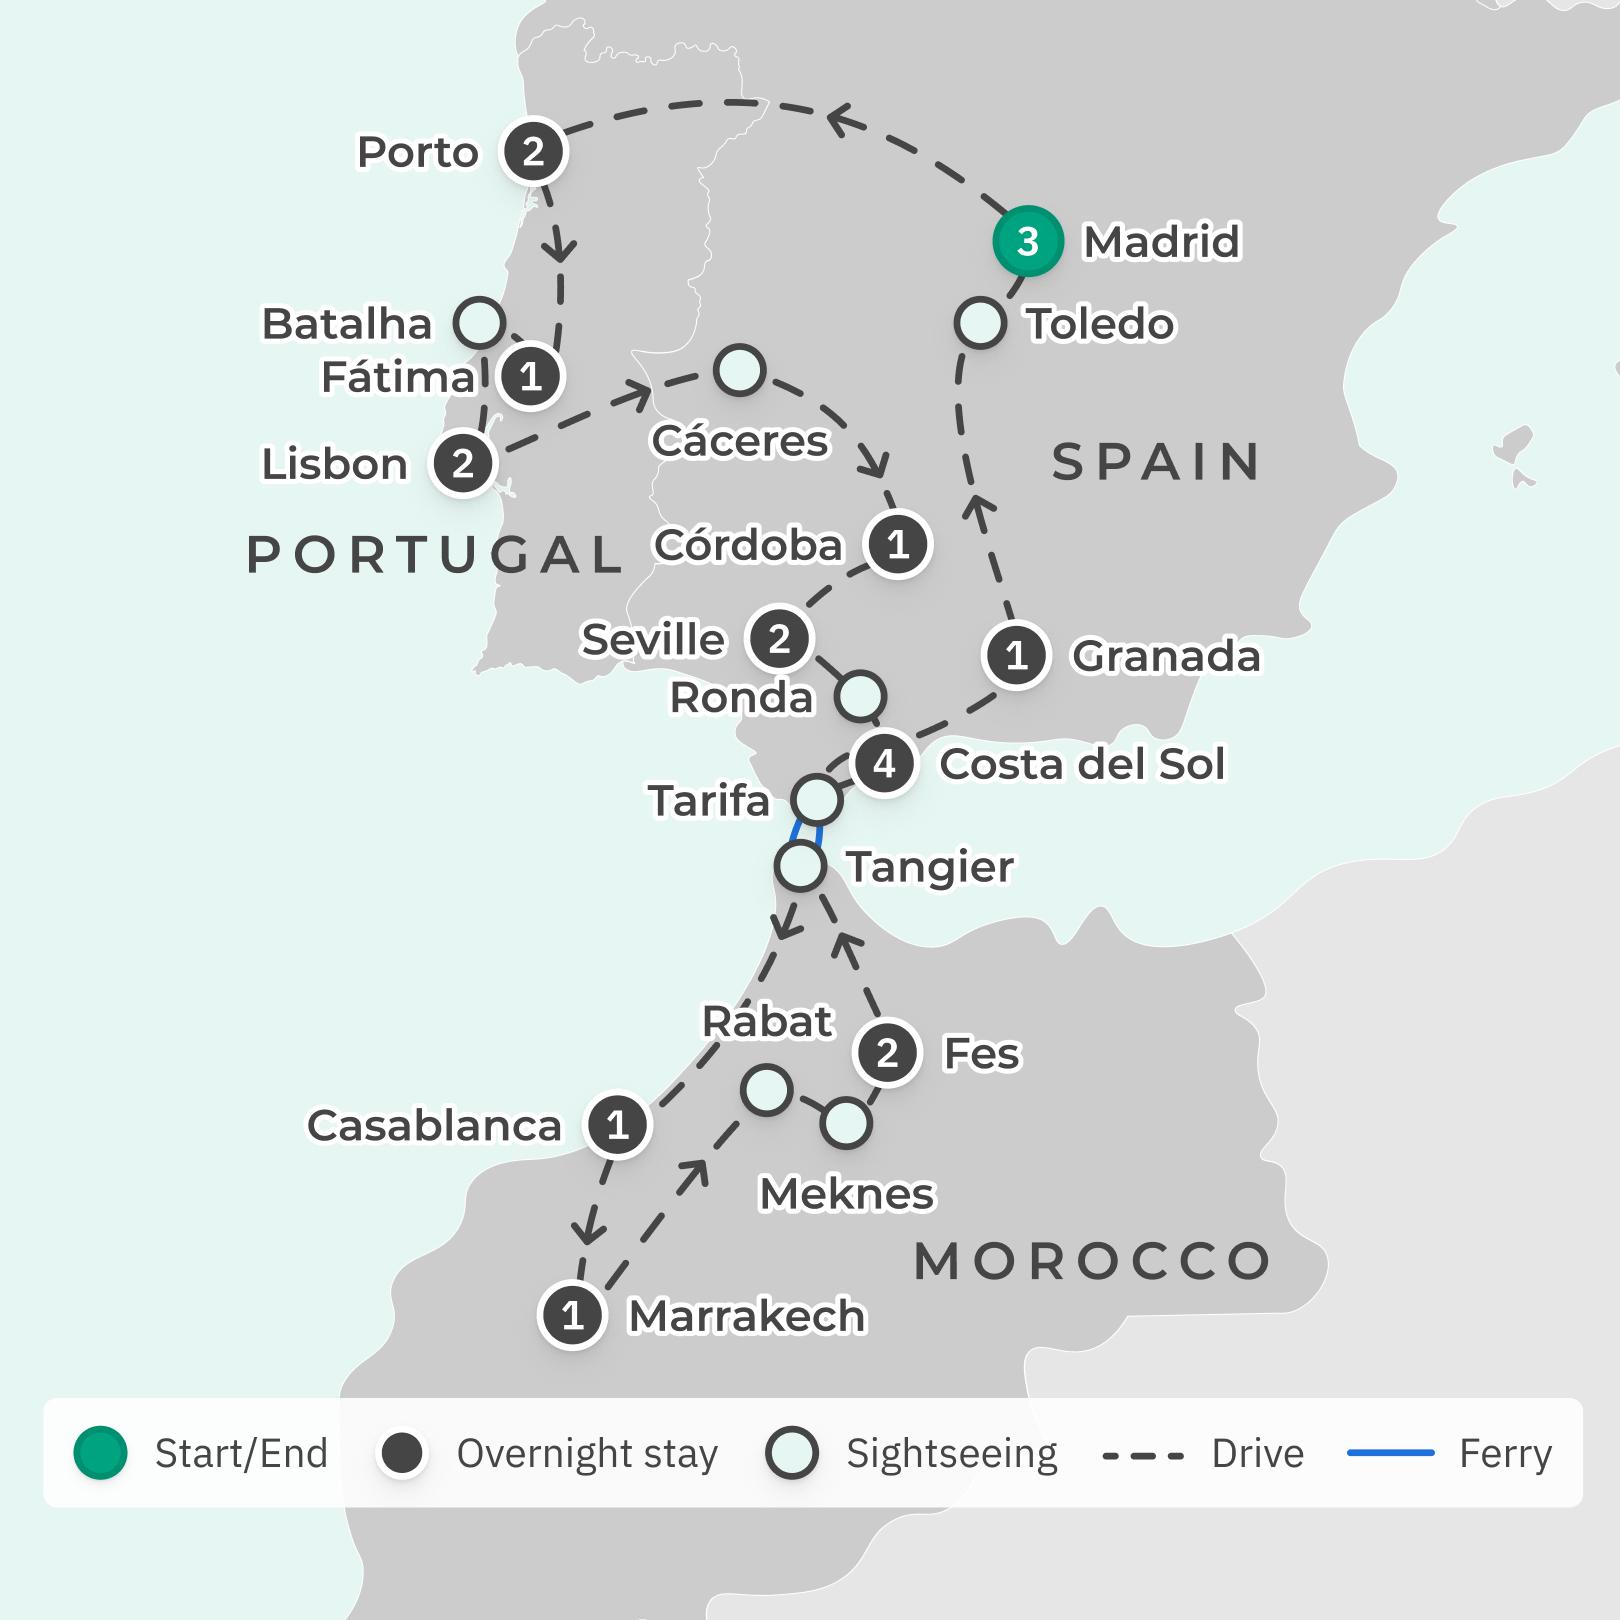 portugal spain morocco cruise